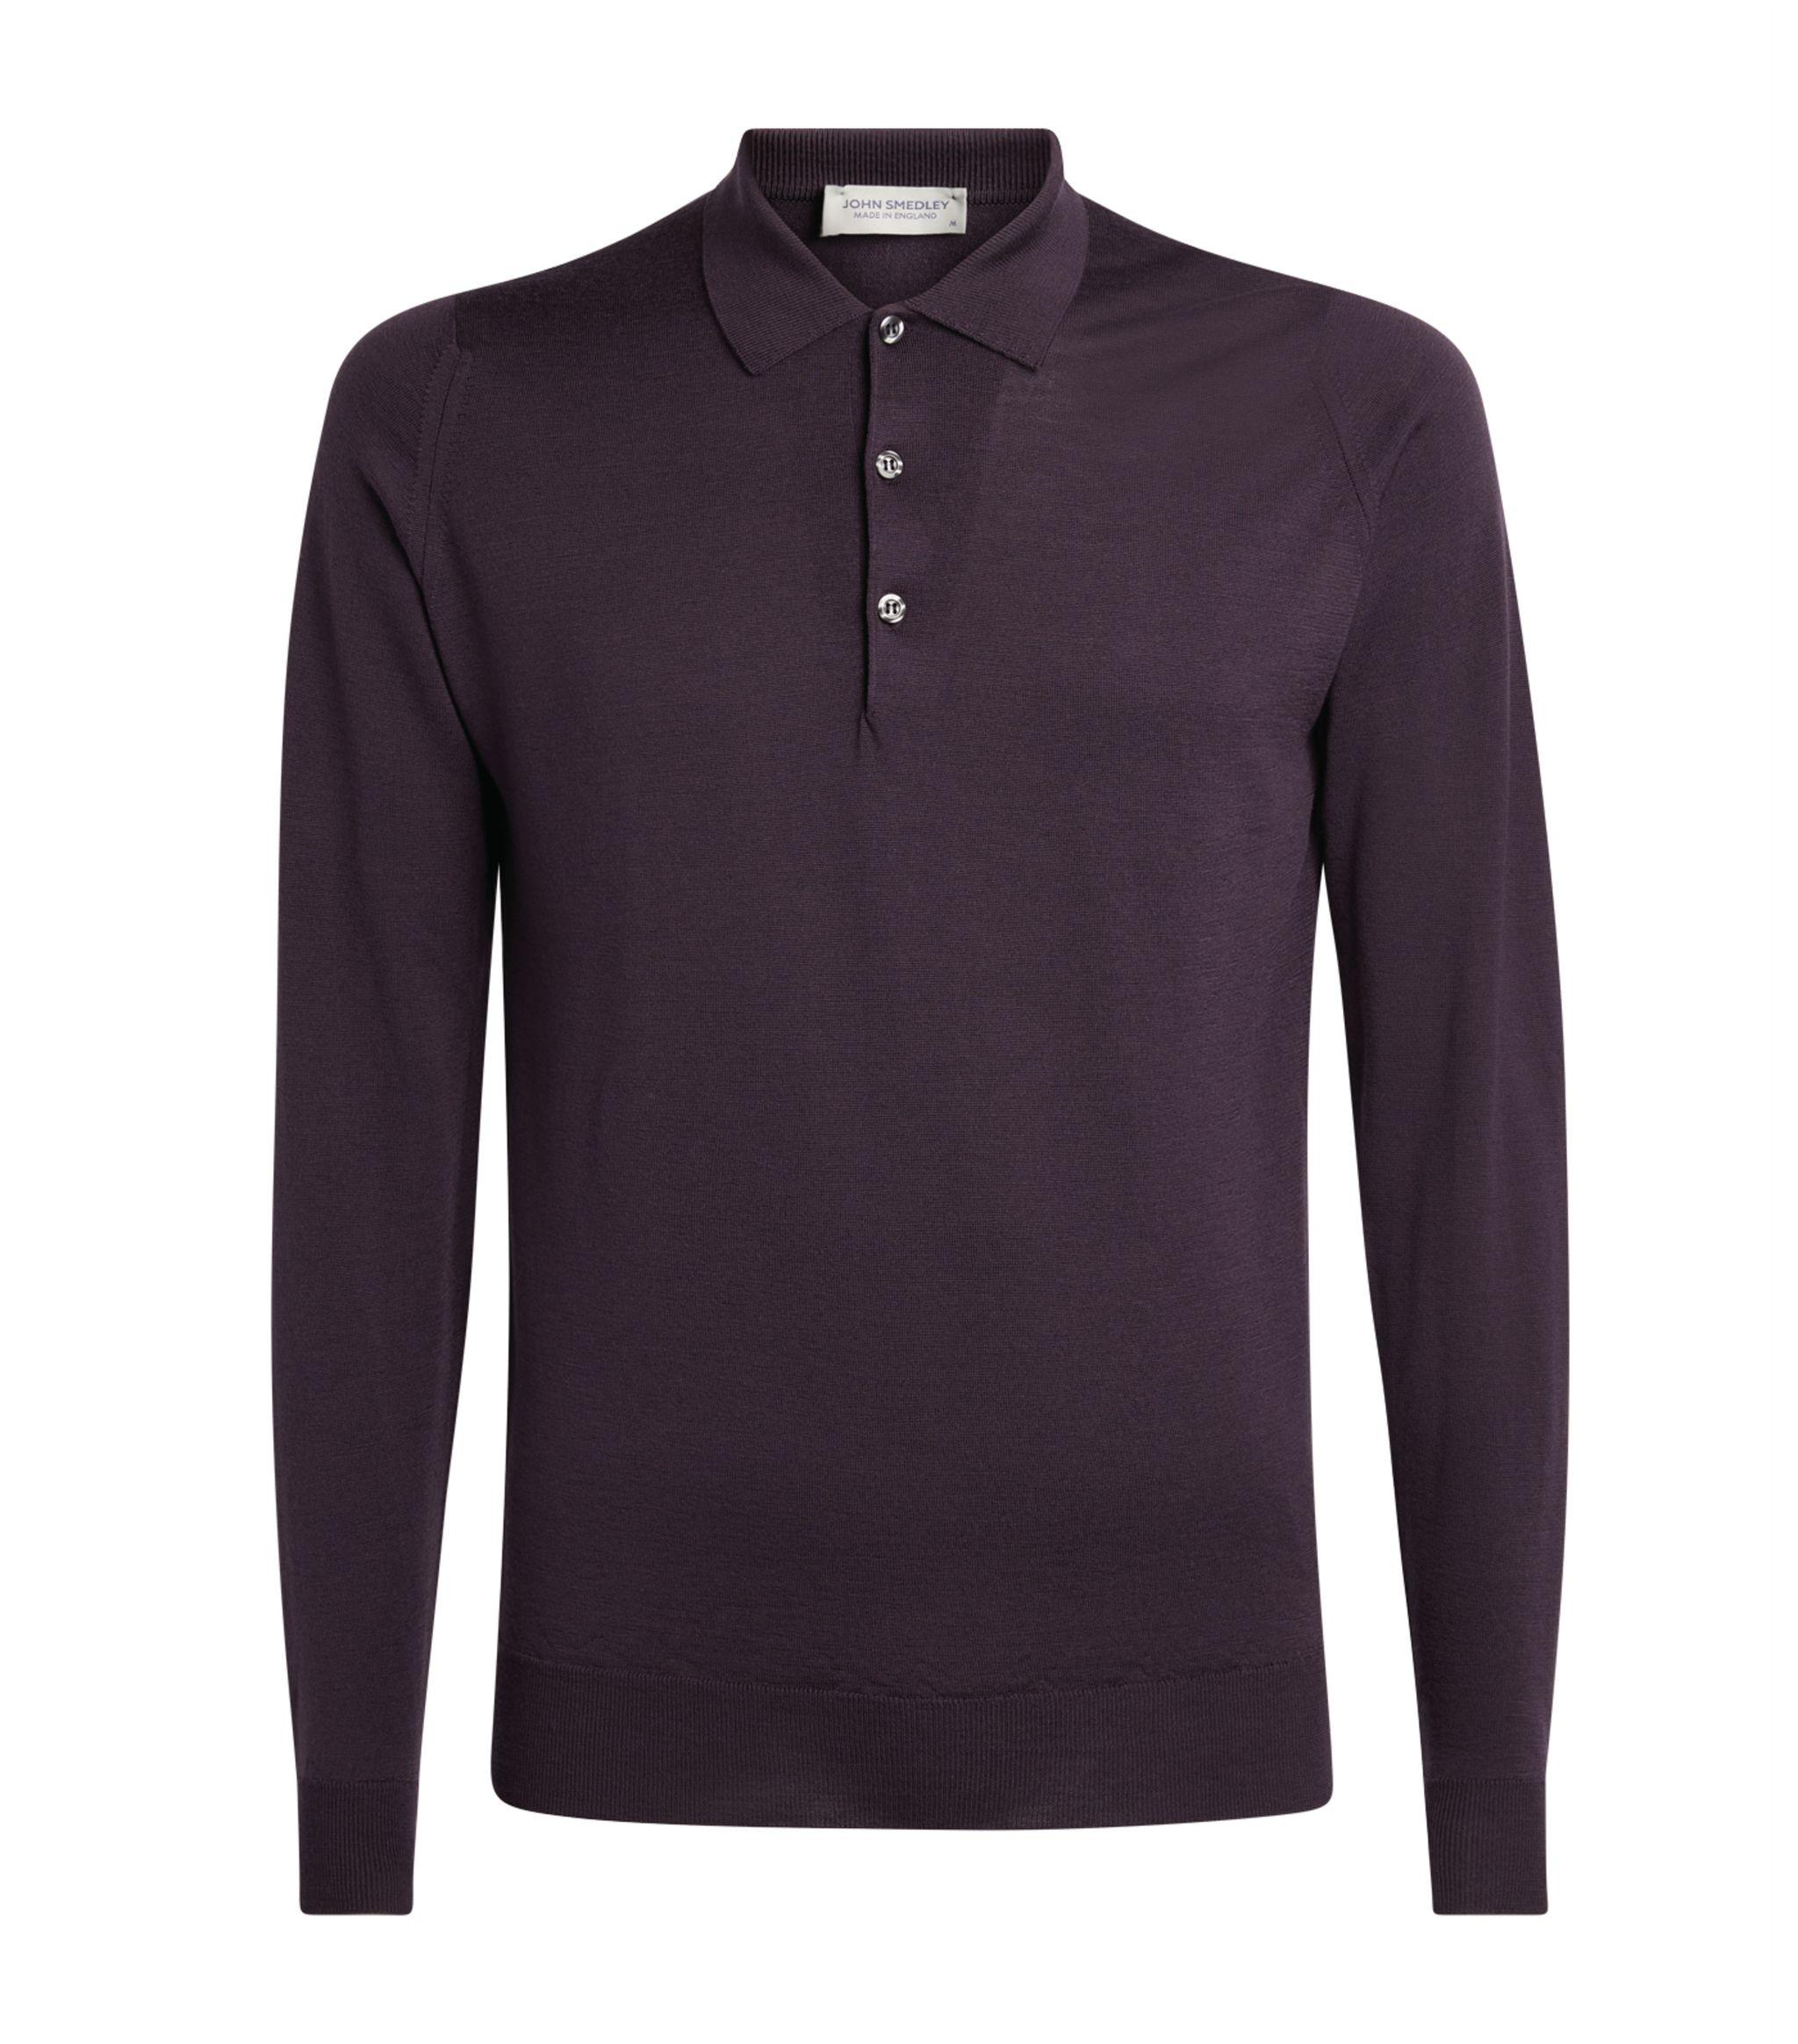 John Smedley Wool Long-sleeved Polo Shirt in Purple for Men - Lyst